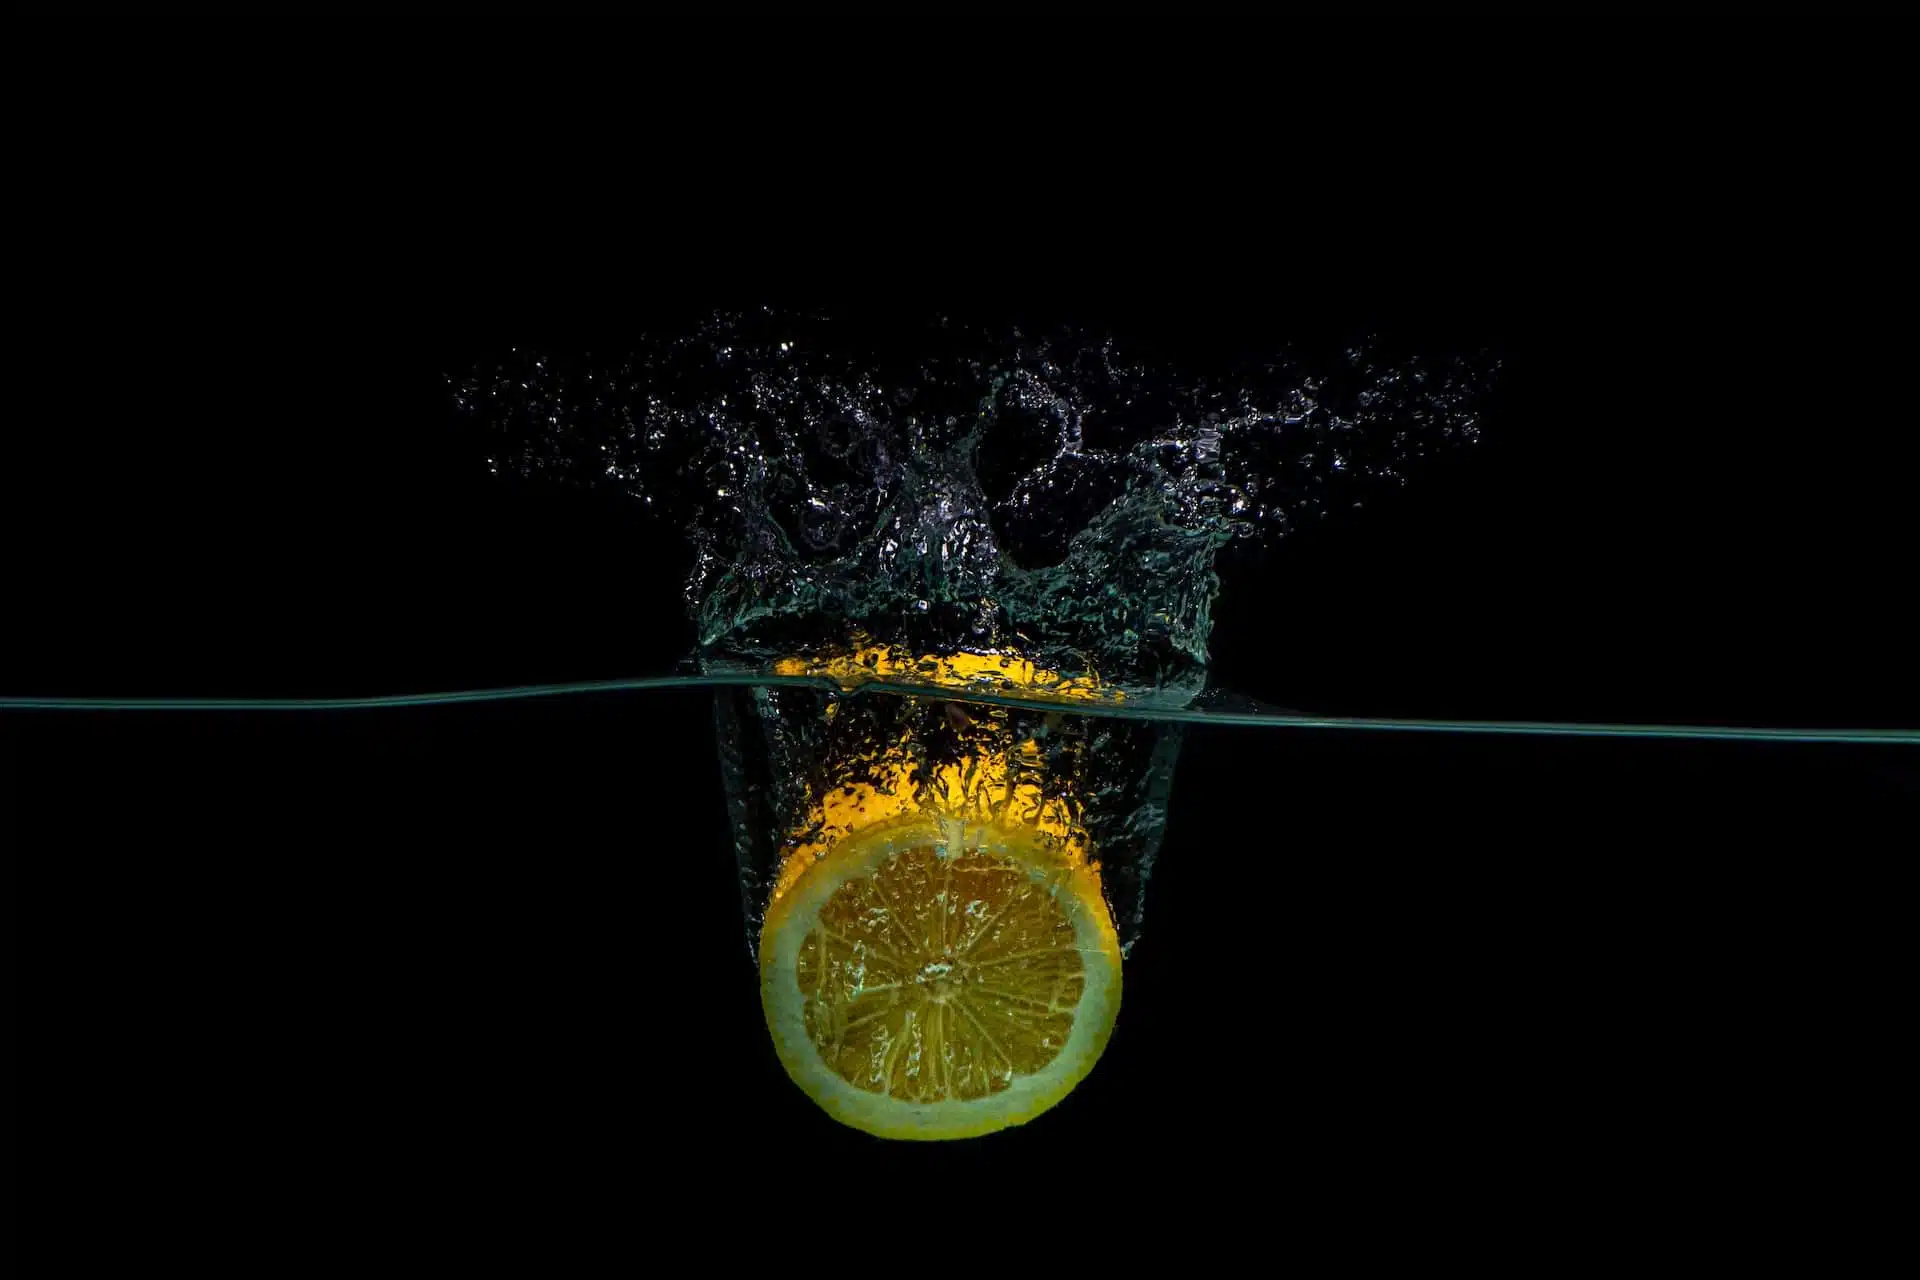 Вода с лимоном фото